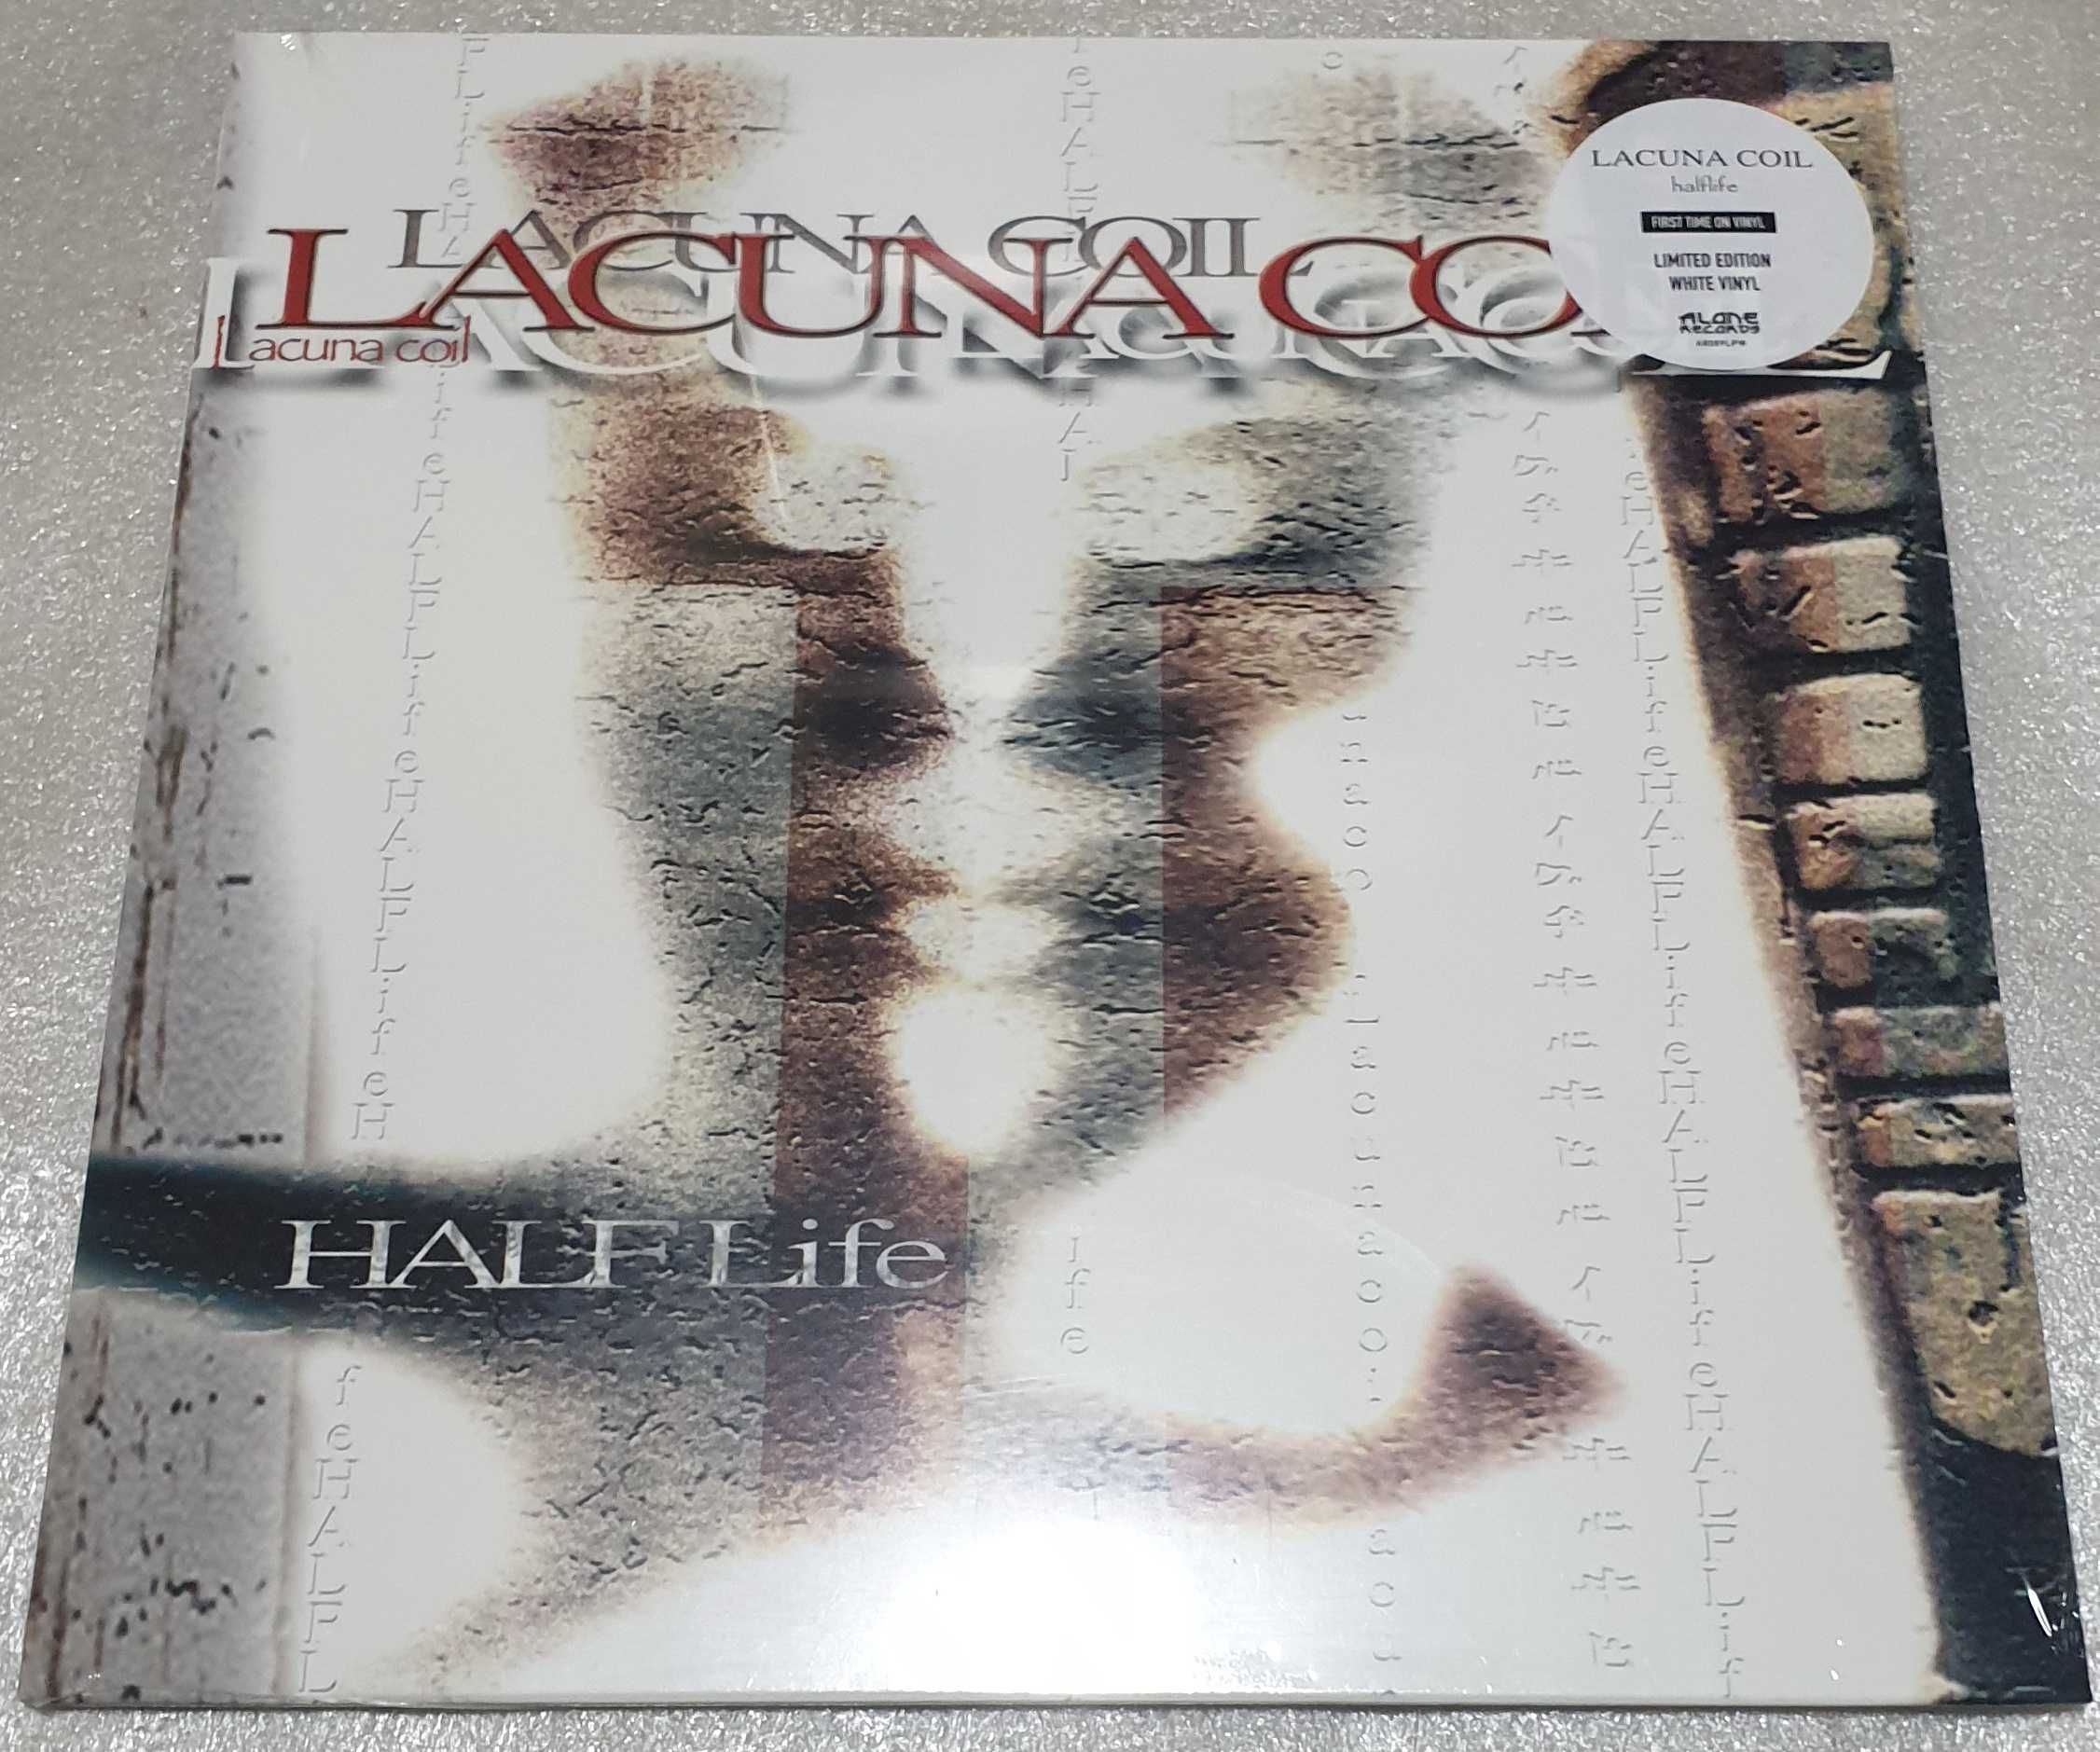 Винил LACUNA COIL "Halflife" 12"LP sirenia xandria